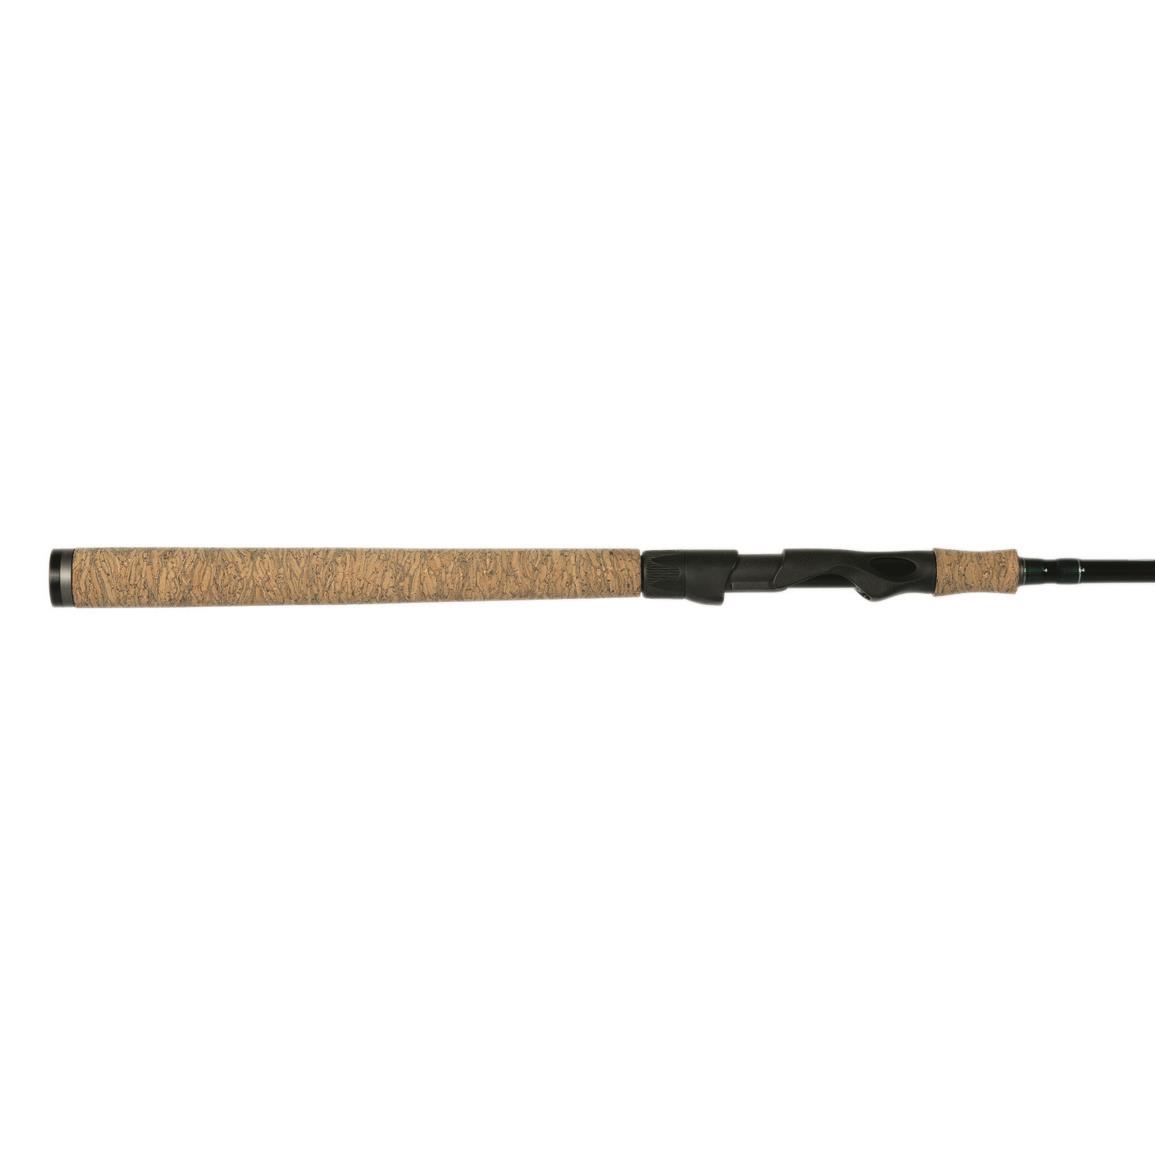 13 Fishing Meta Series Crank Casting Rod, 7'4 Length, Moderate